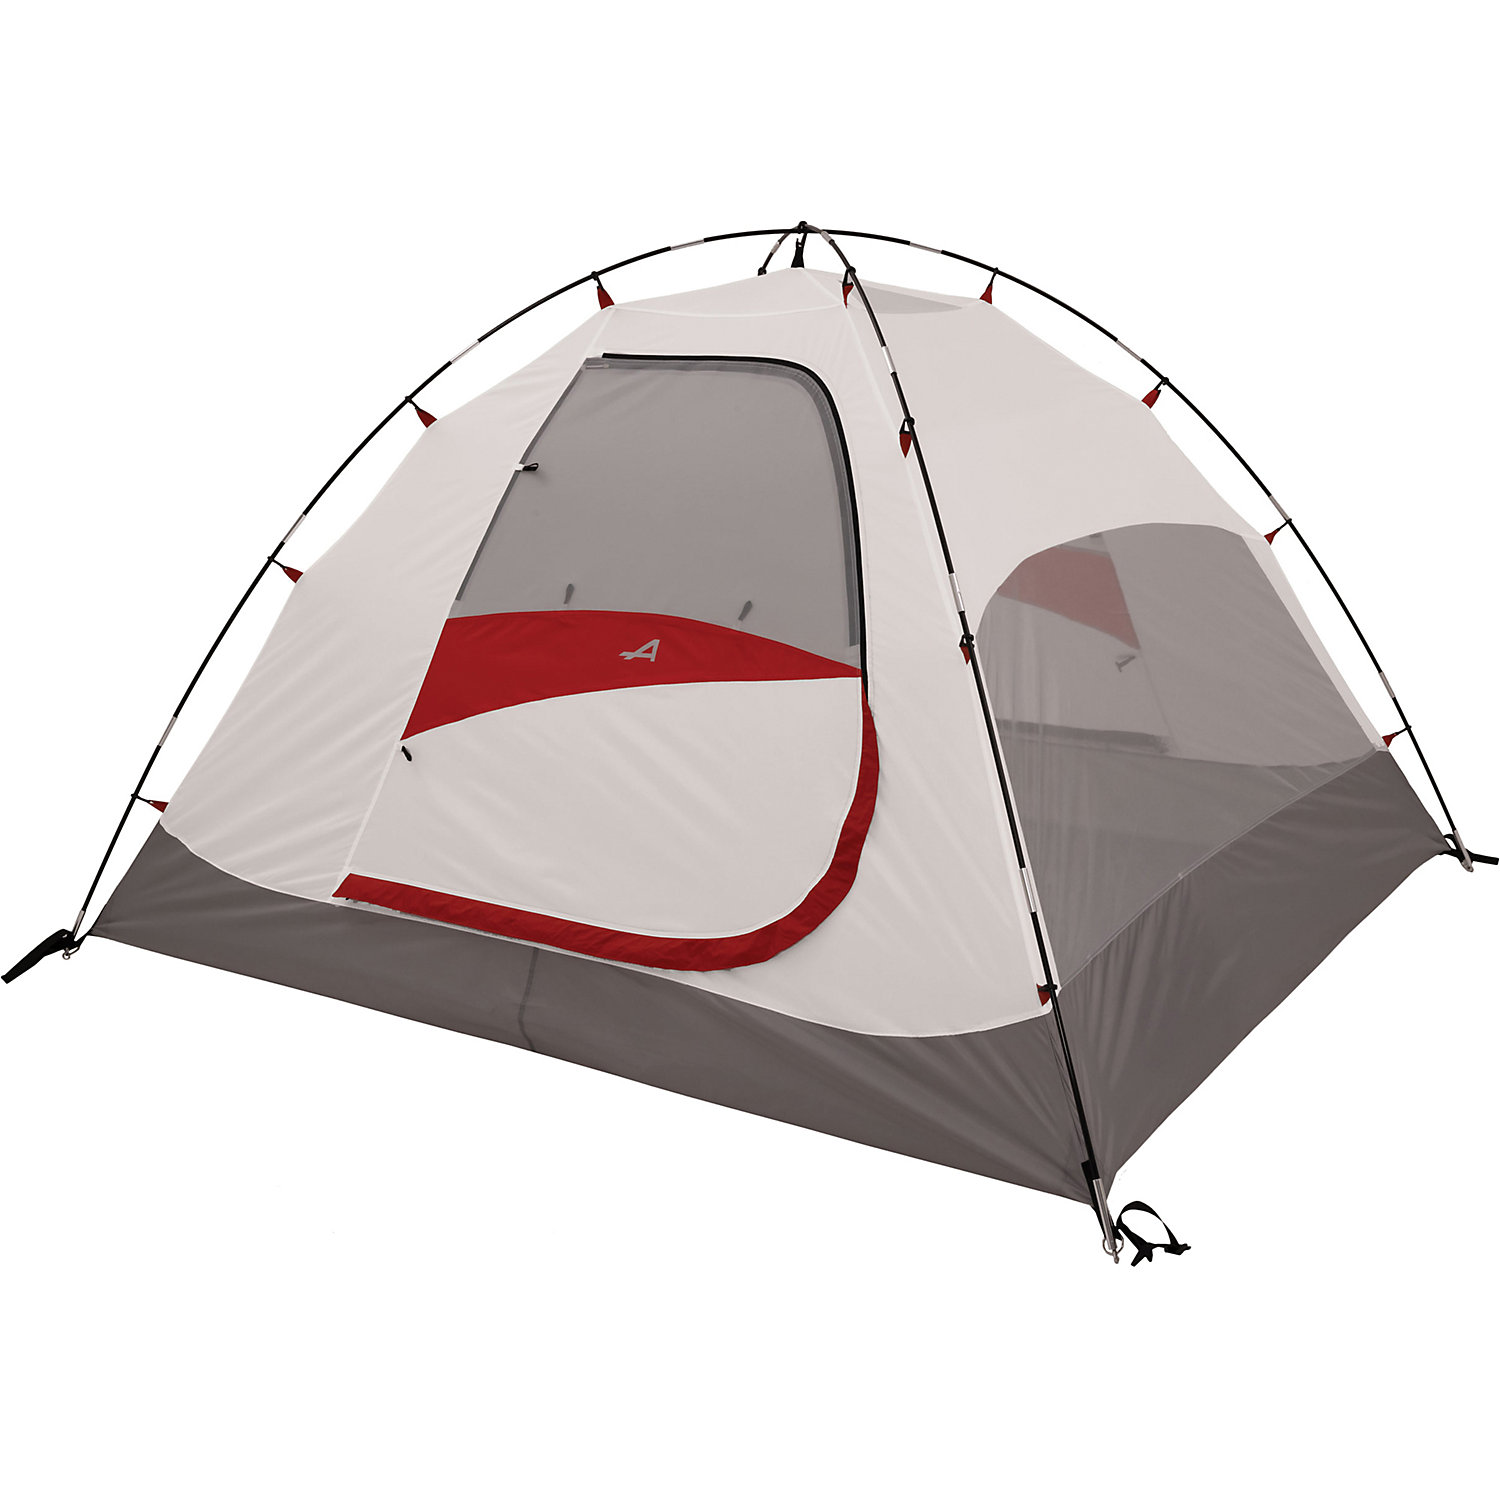 ALPS Mountaineering Meramac 4 Tent